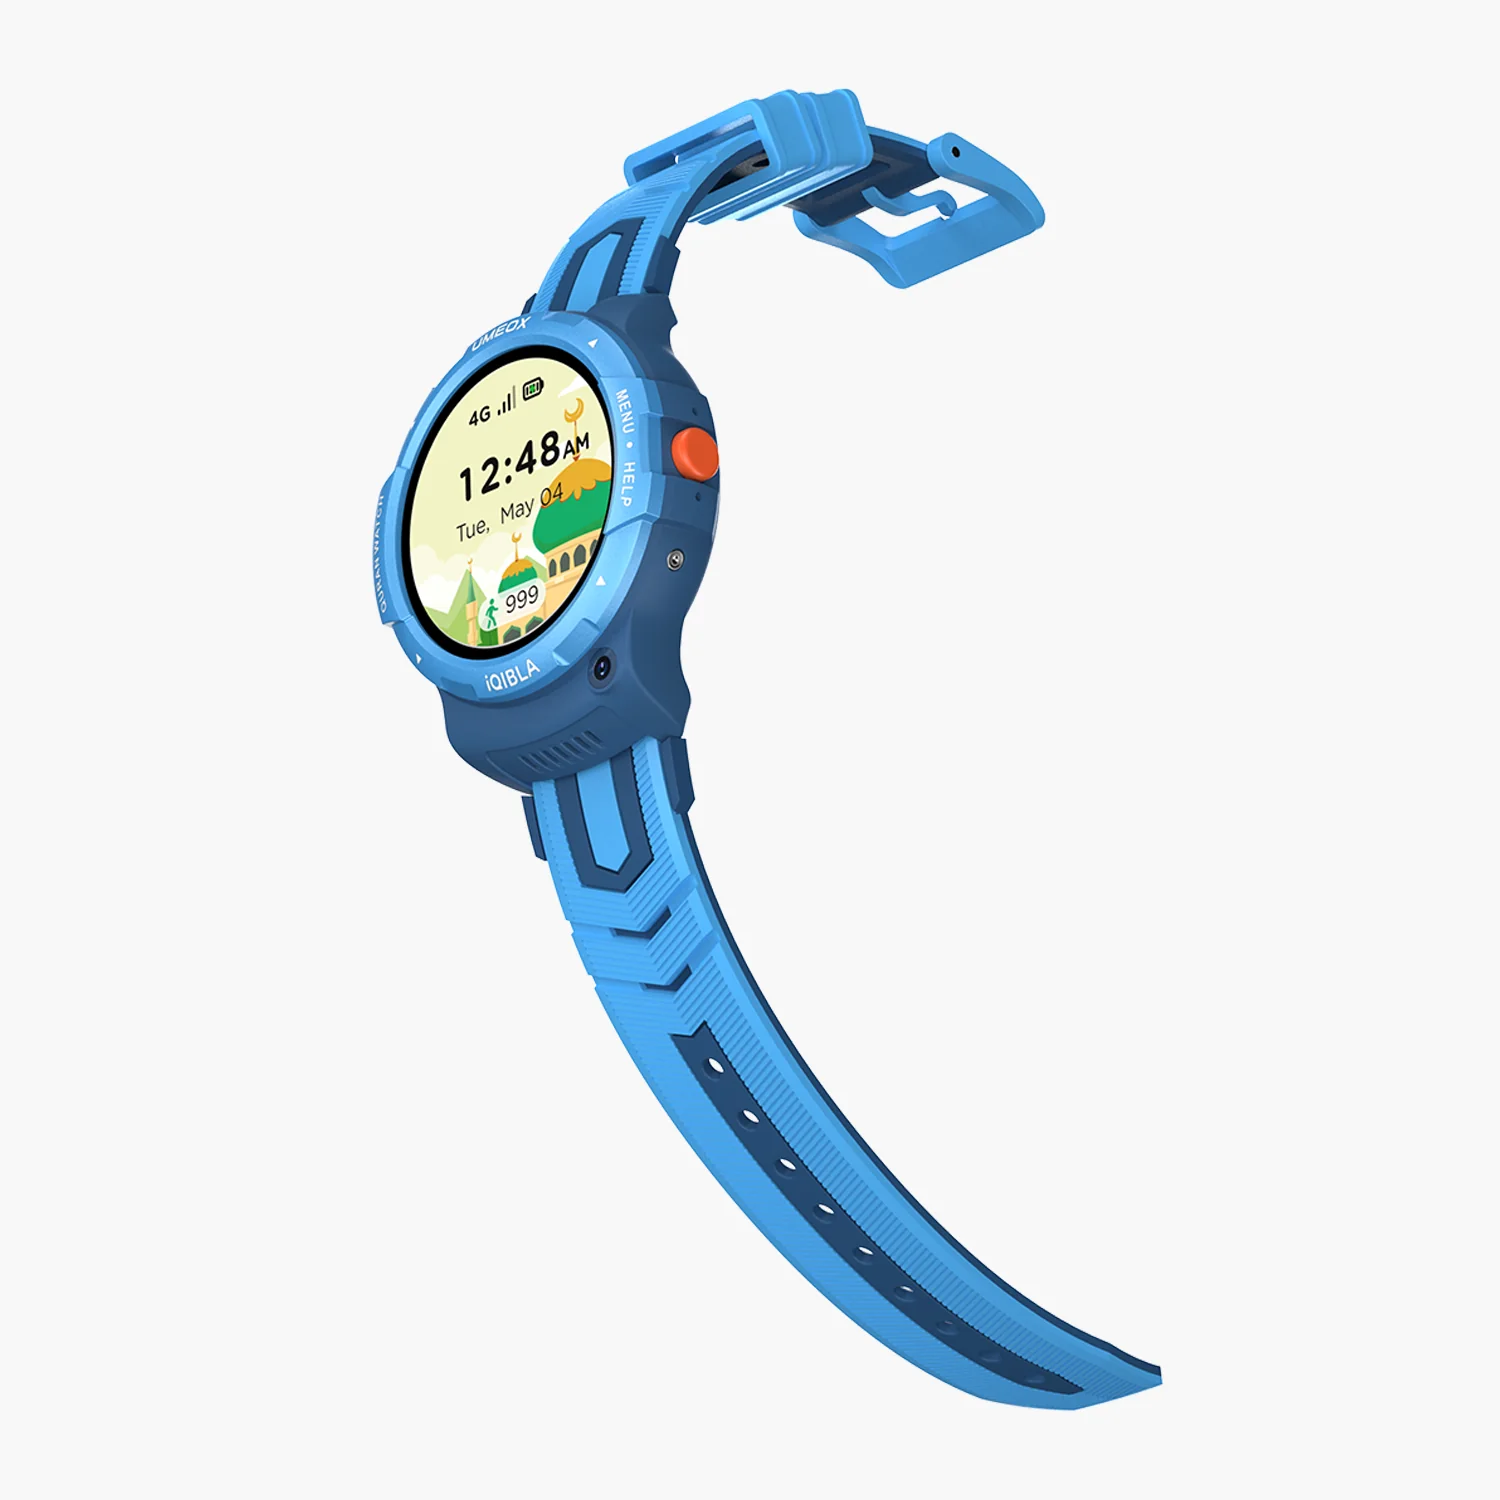 iQibla Qwatch K1s Kids Smart watch - Blue